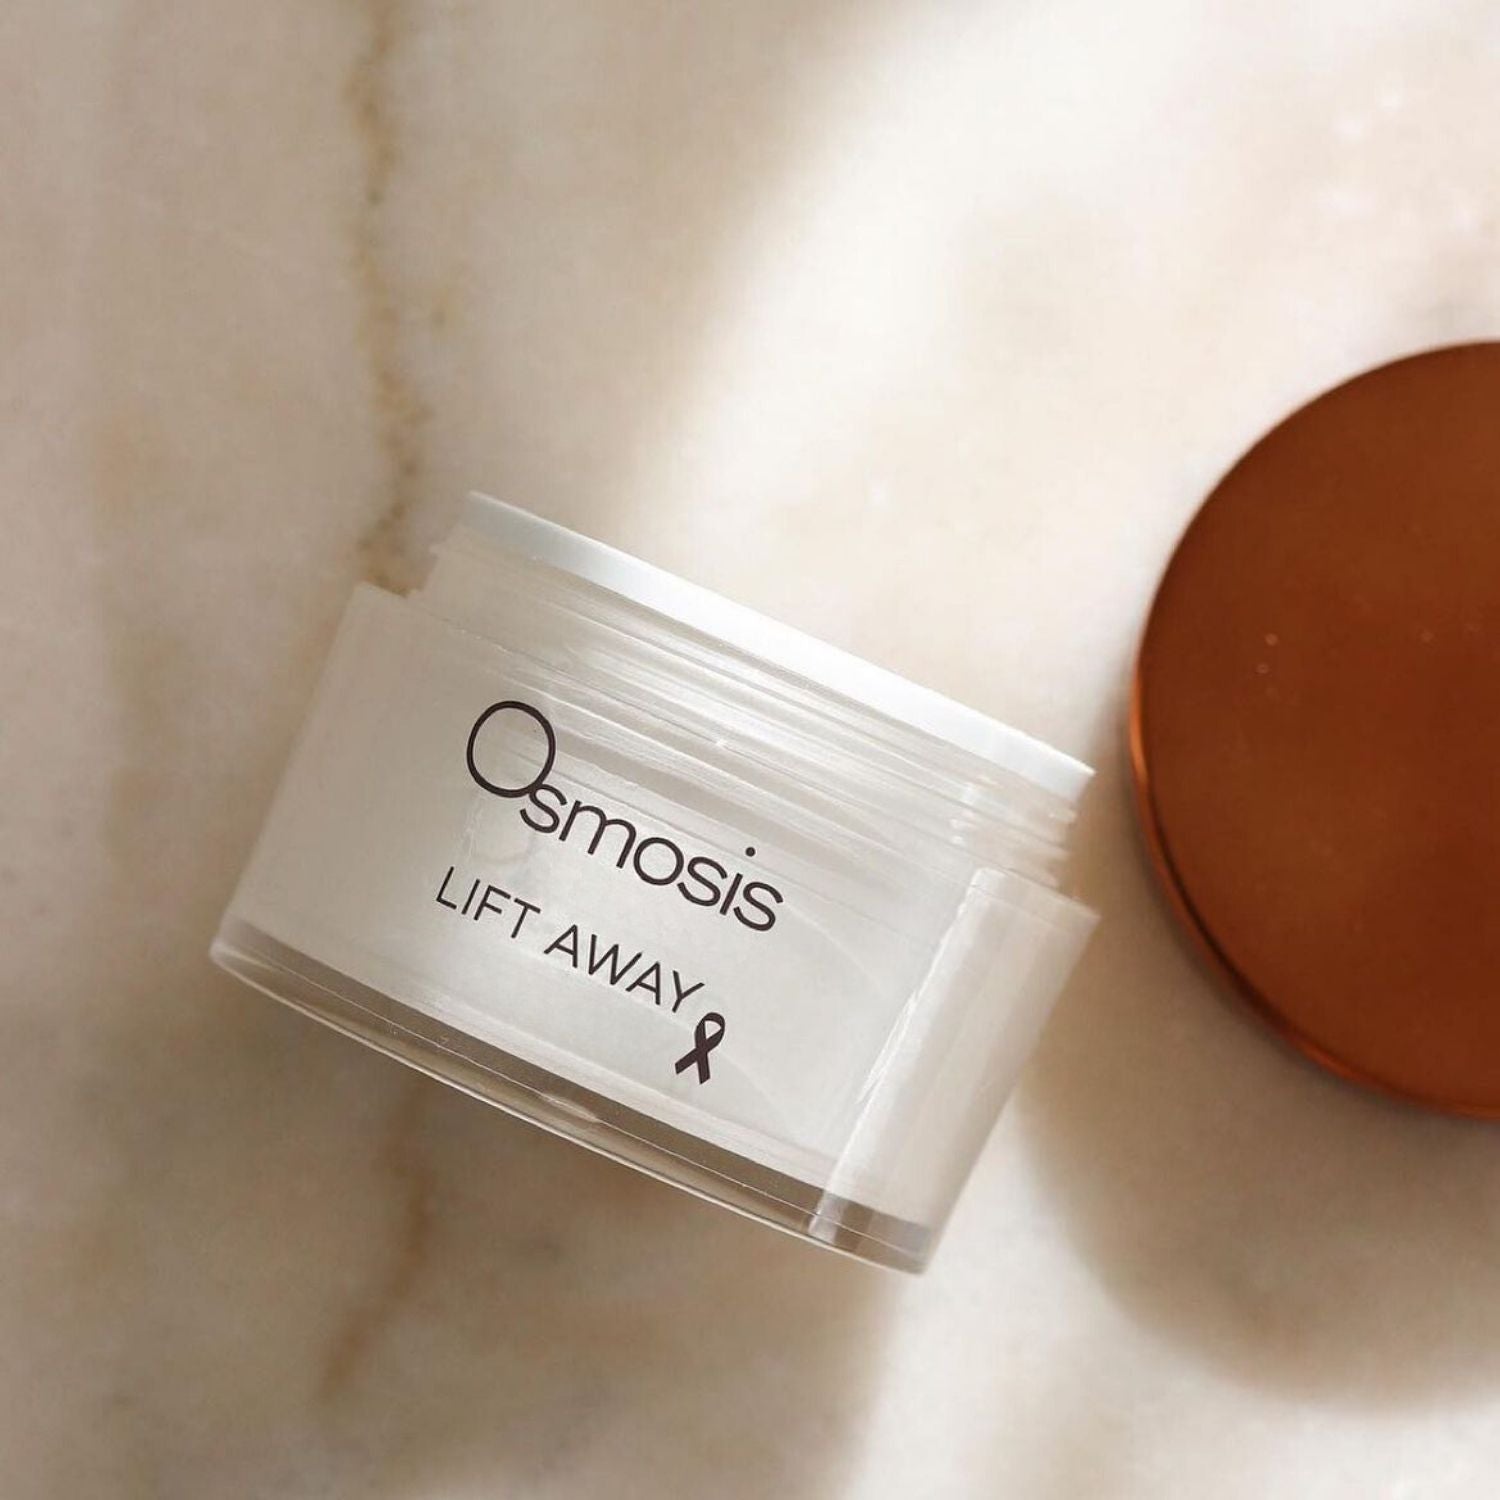 opened jar of osmosis lift away beauty skincare displayed on countertop 